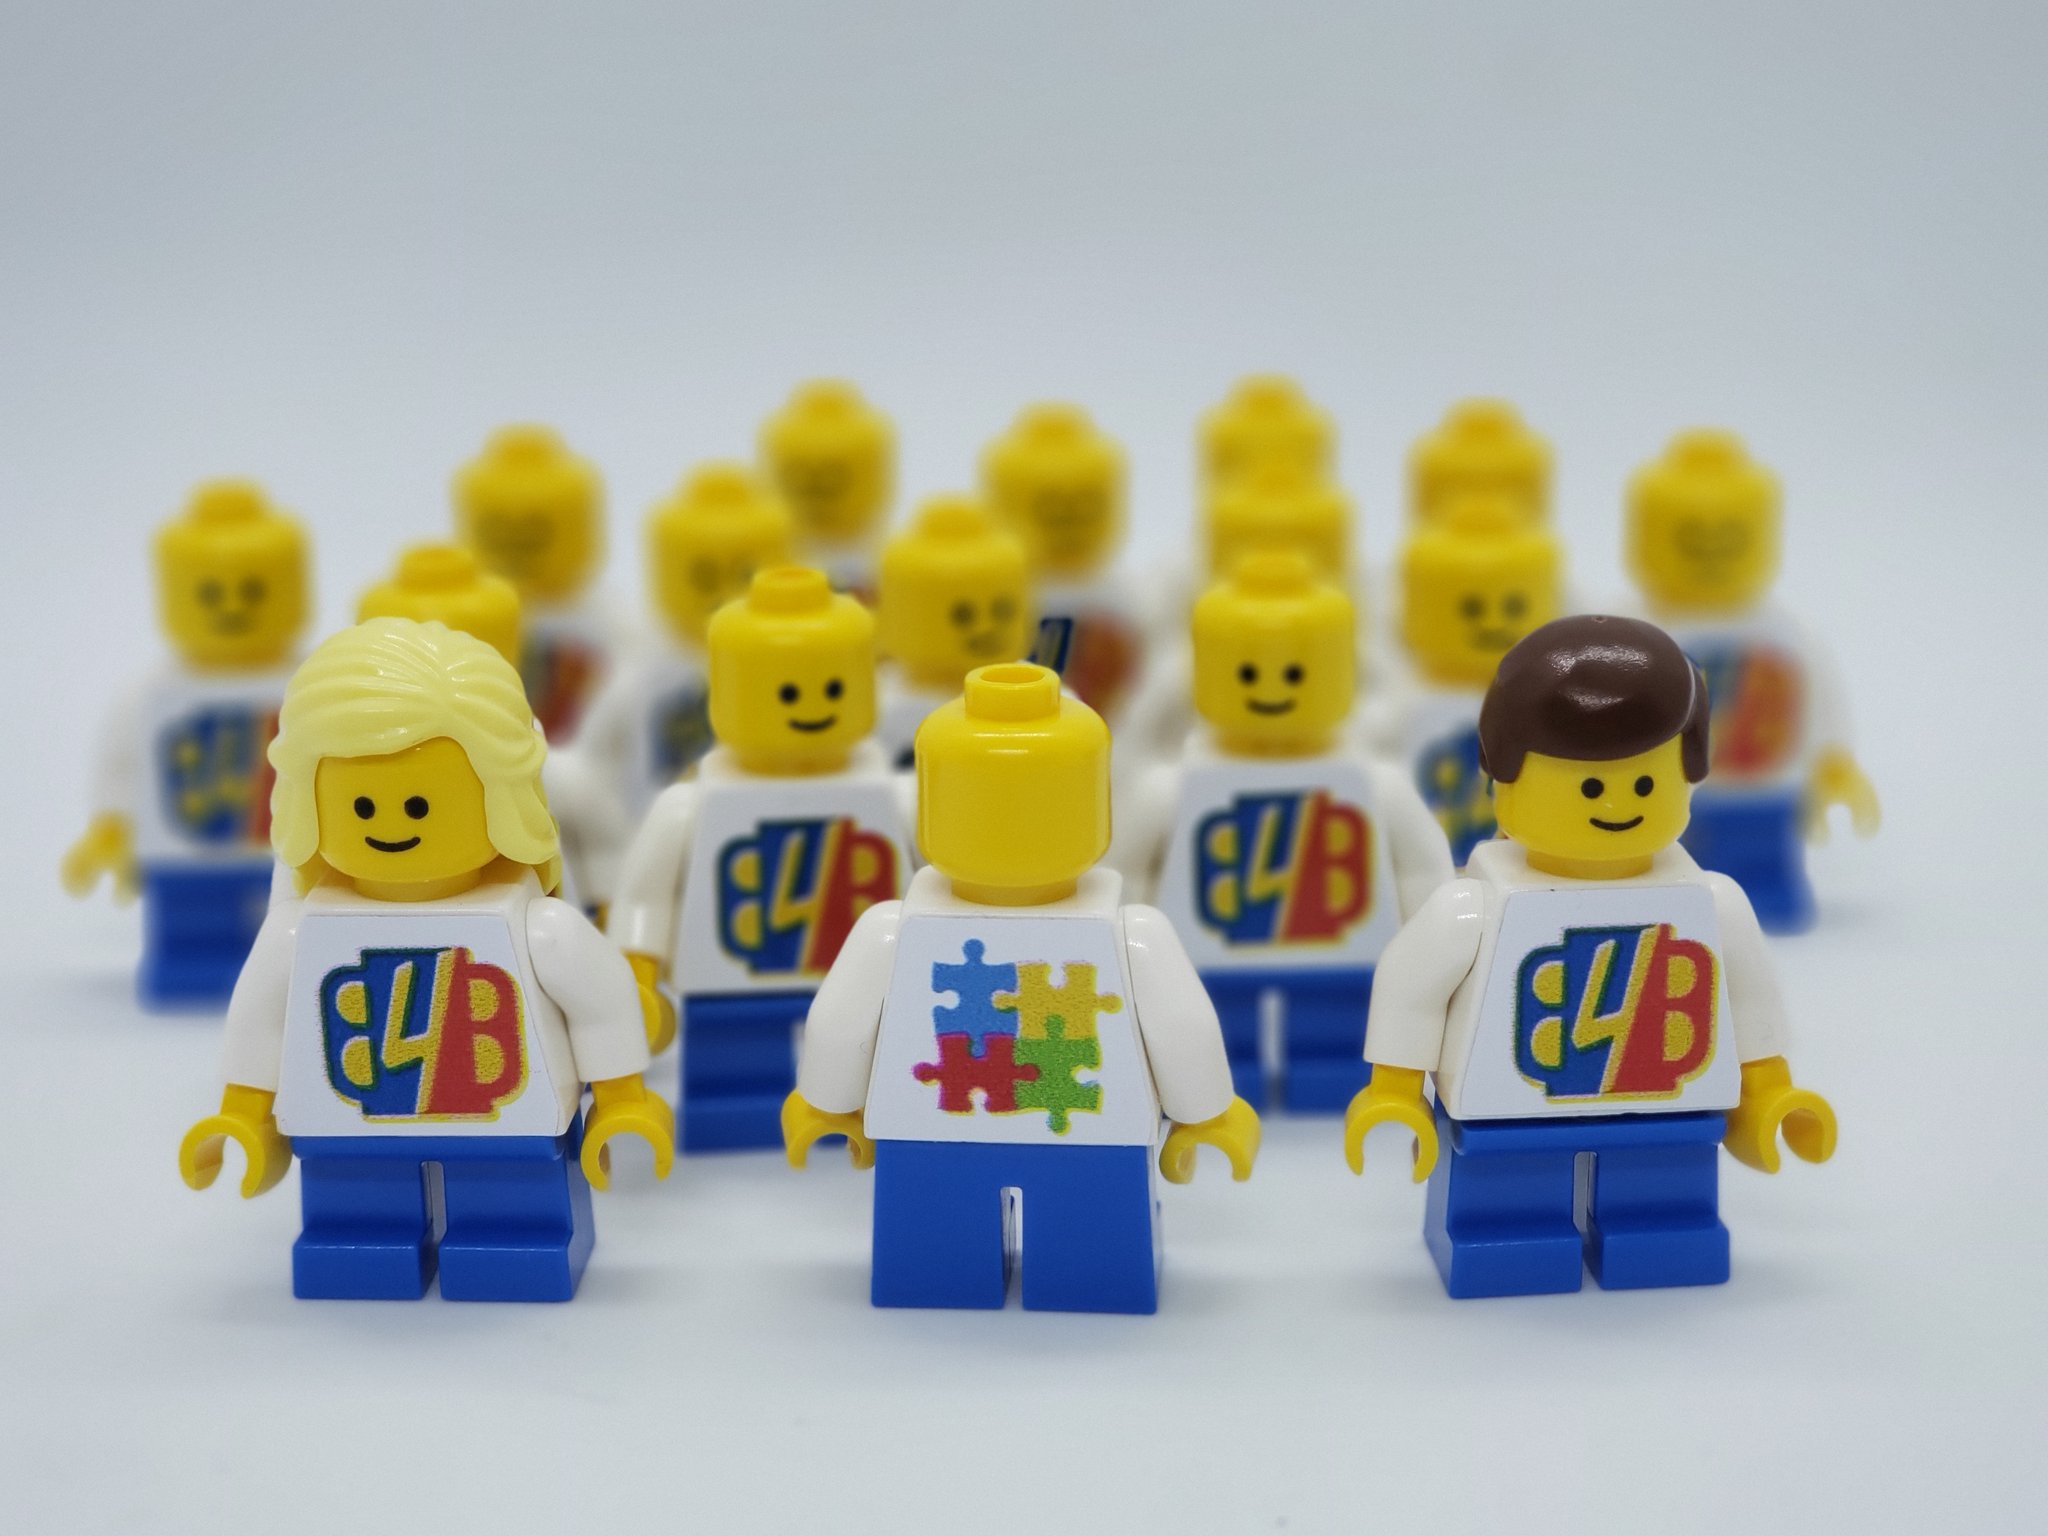 Broke4Bricks Twitter: "Broke4Bricks Autism Awareness LEGO Minifigures just found home in our $25 VIP bags #bricksonthecape #LEGOblocks #LEGO #minifig #familyfriendly #AFOL https://t.co/BZXJ5JTHZW" / Twitter